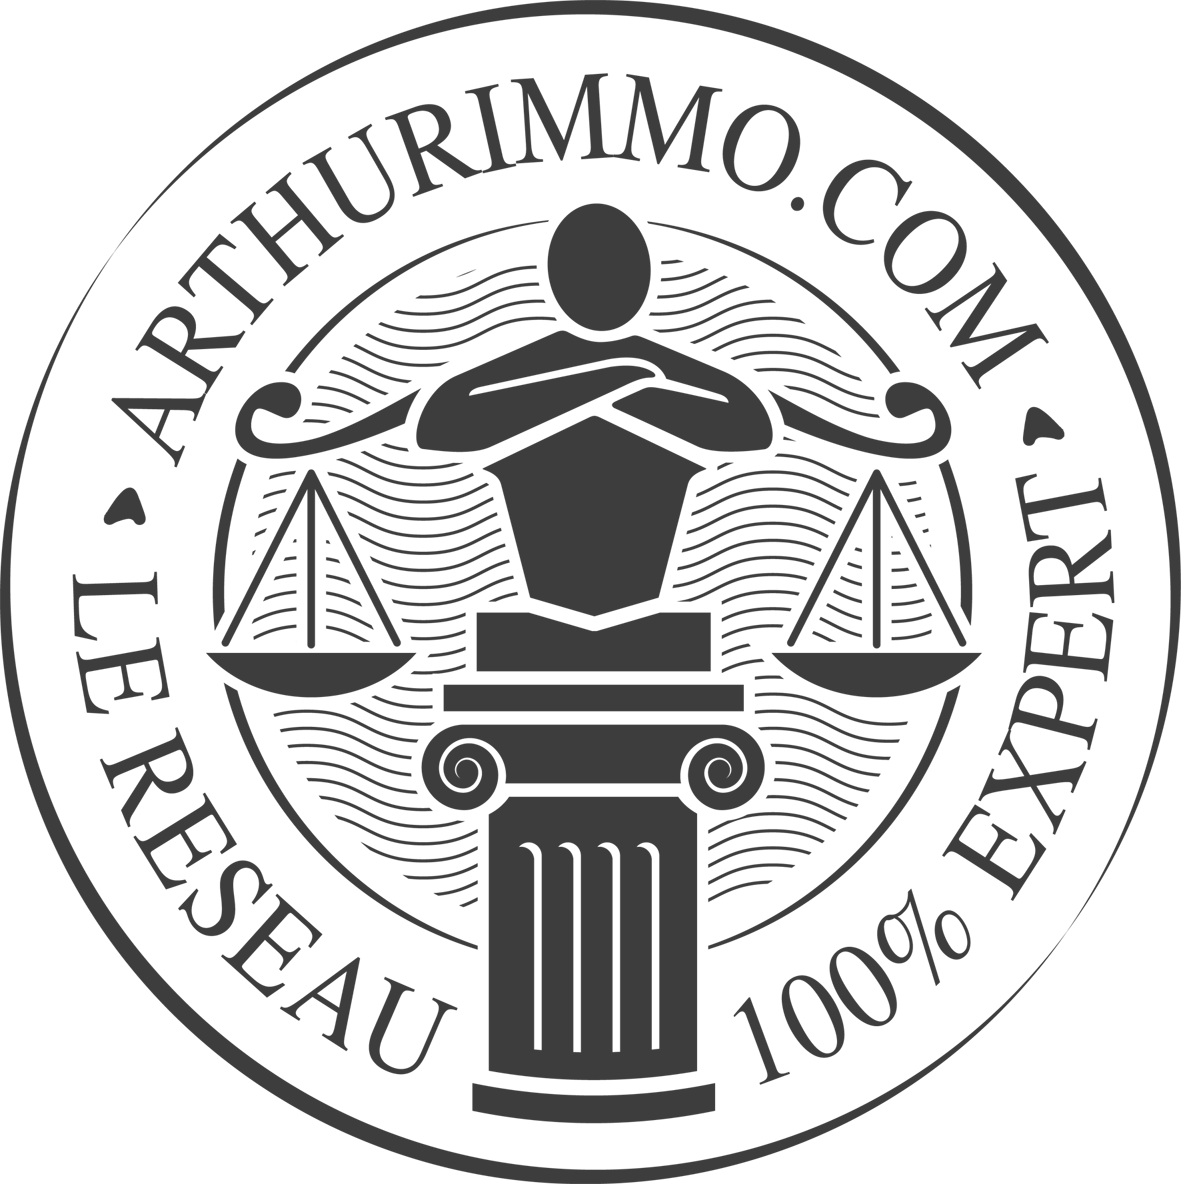 Arthurimmo - Expert immobilier agrée